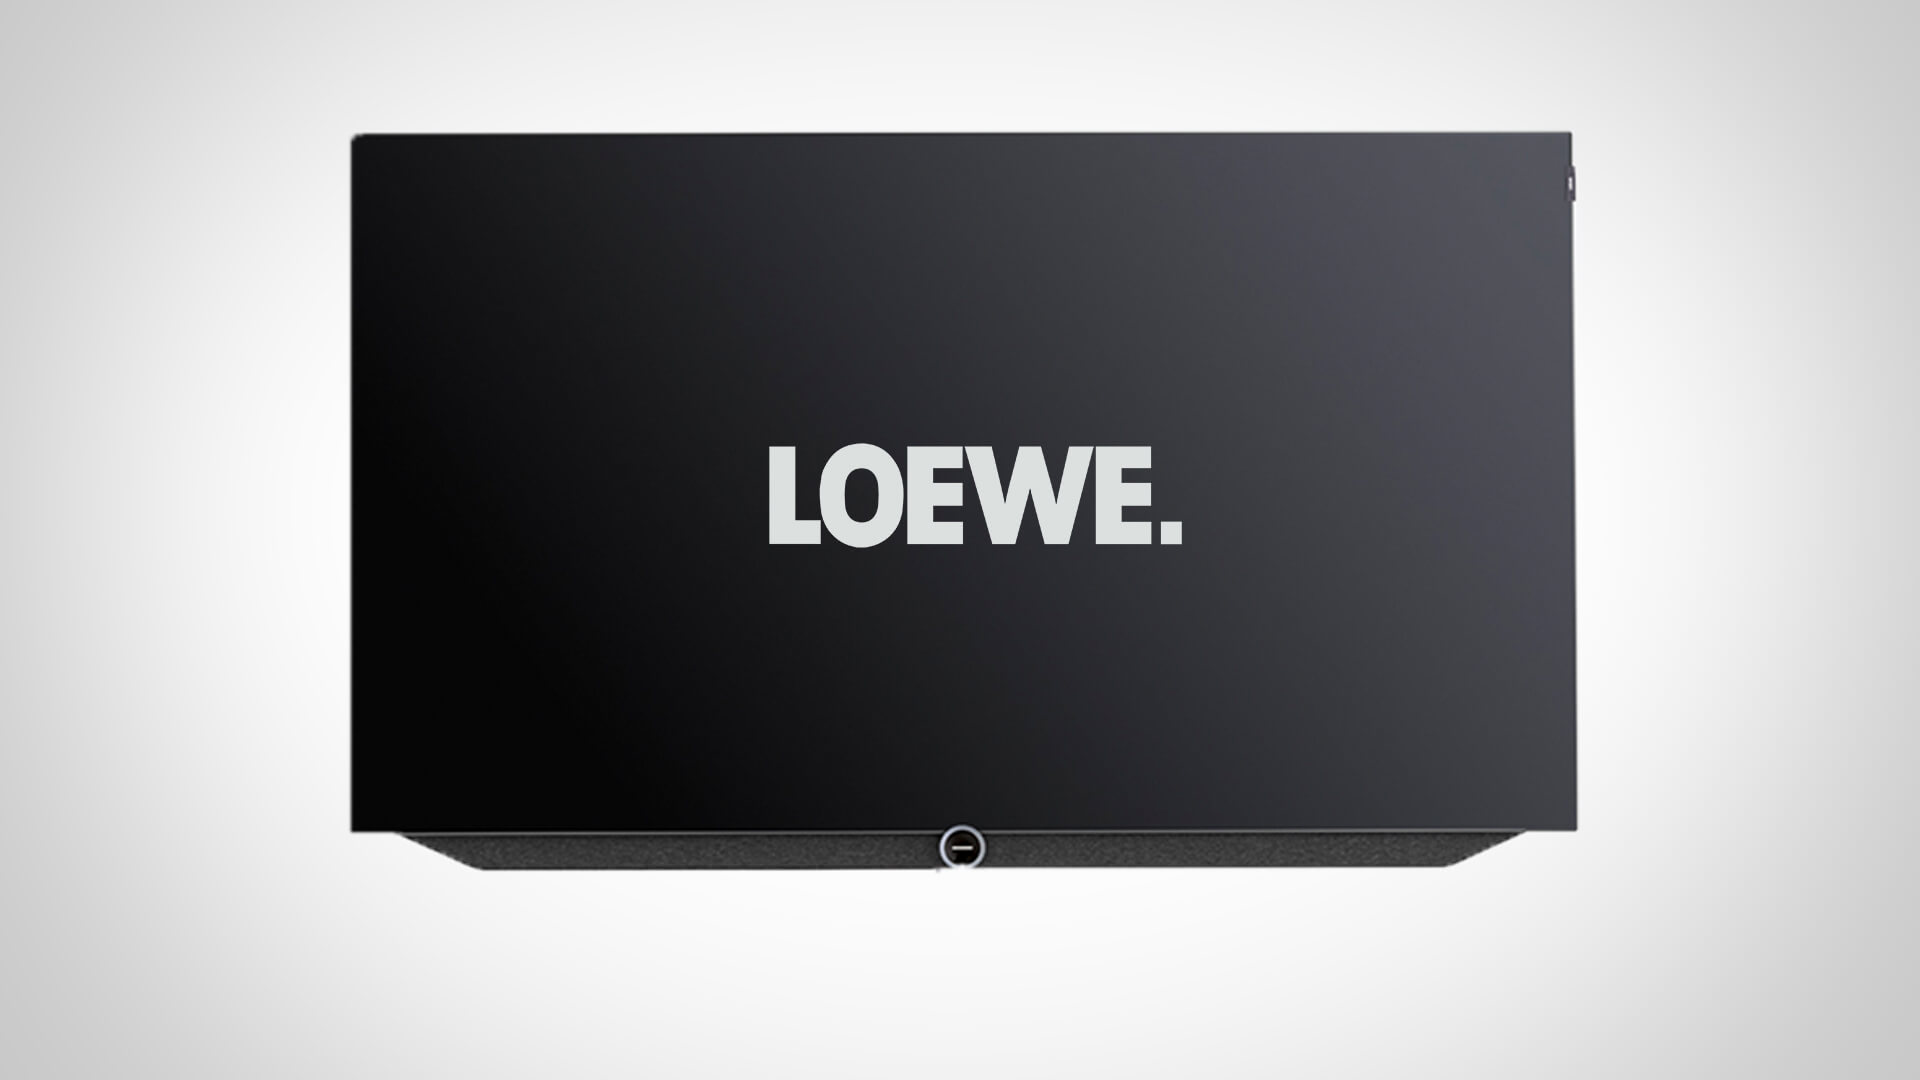 Loewe Smart TV